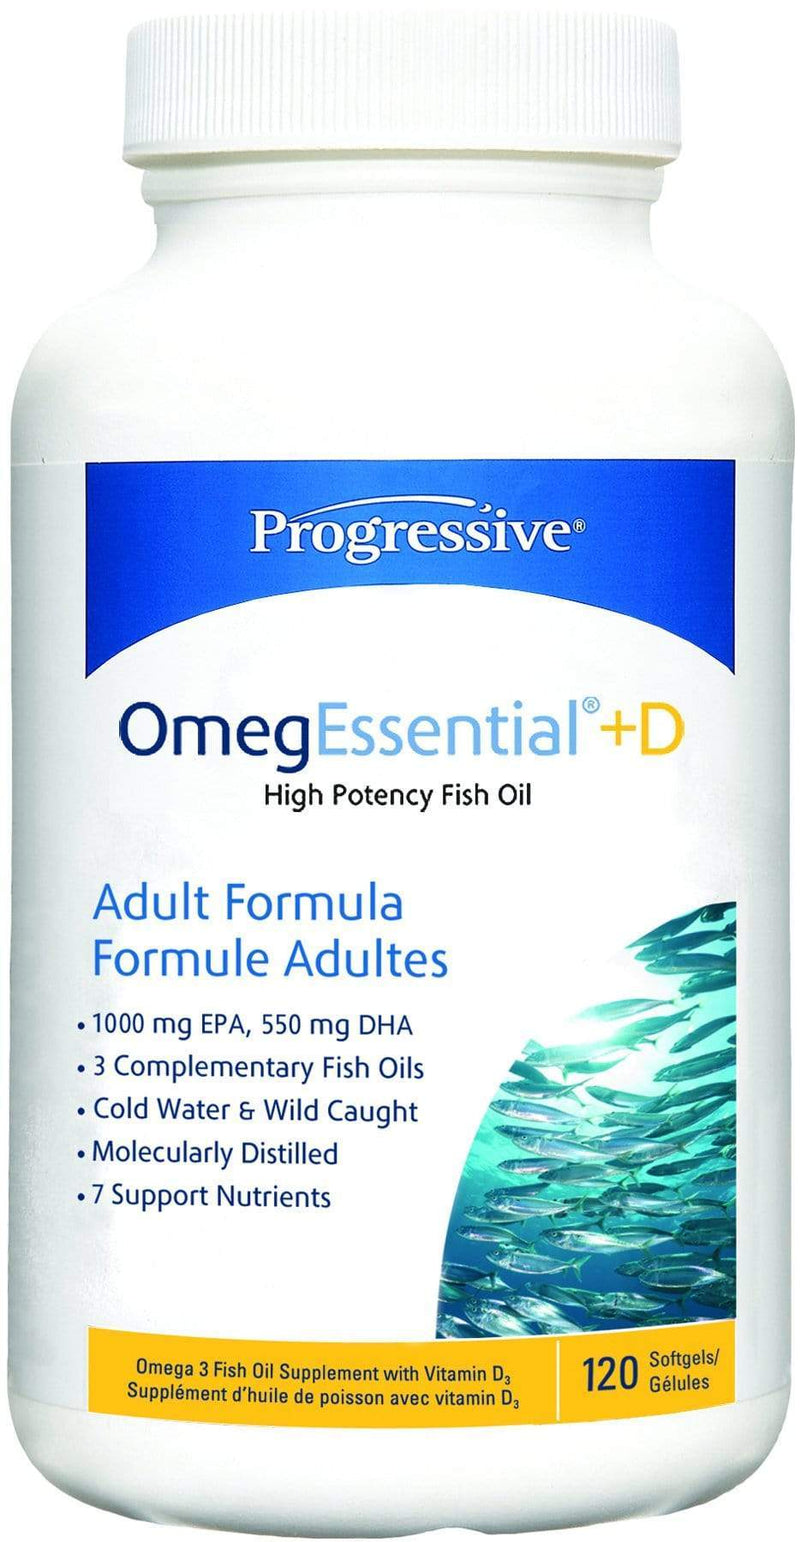 Progressive OmegEssential + D Adult